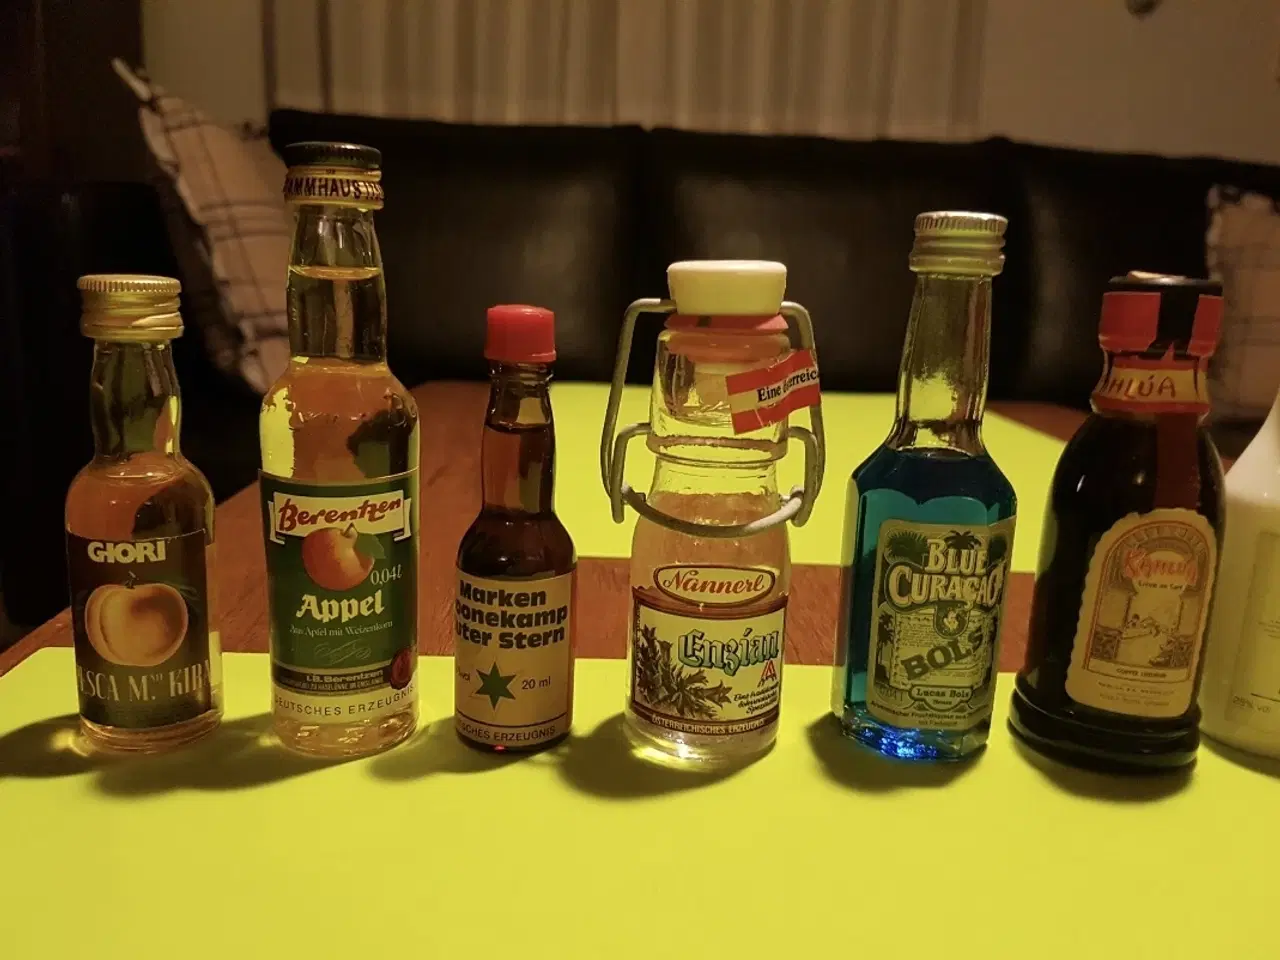 Billede 11 - Forskellige miniature / mini spiritusflasker